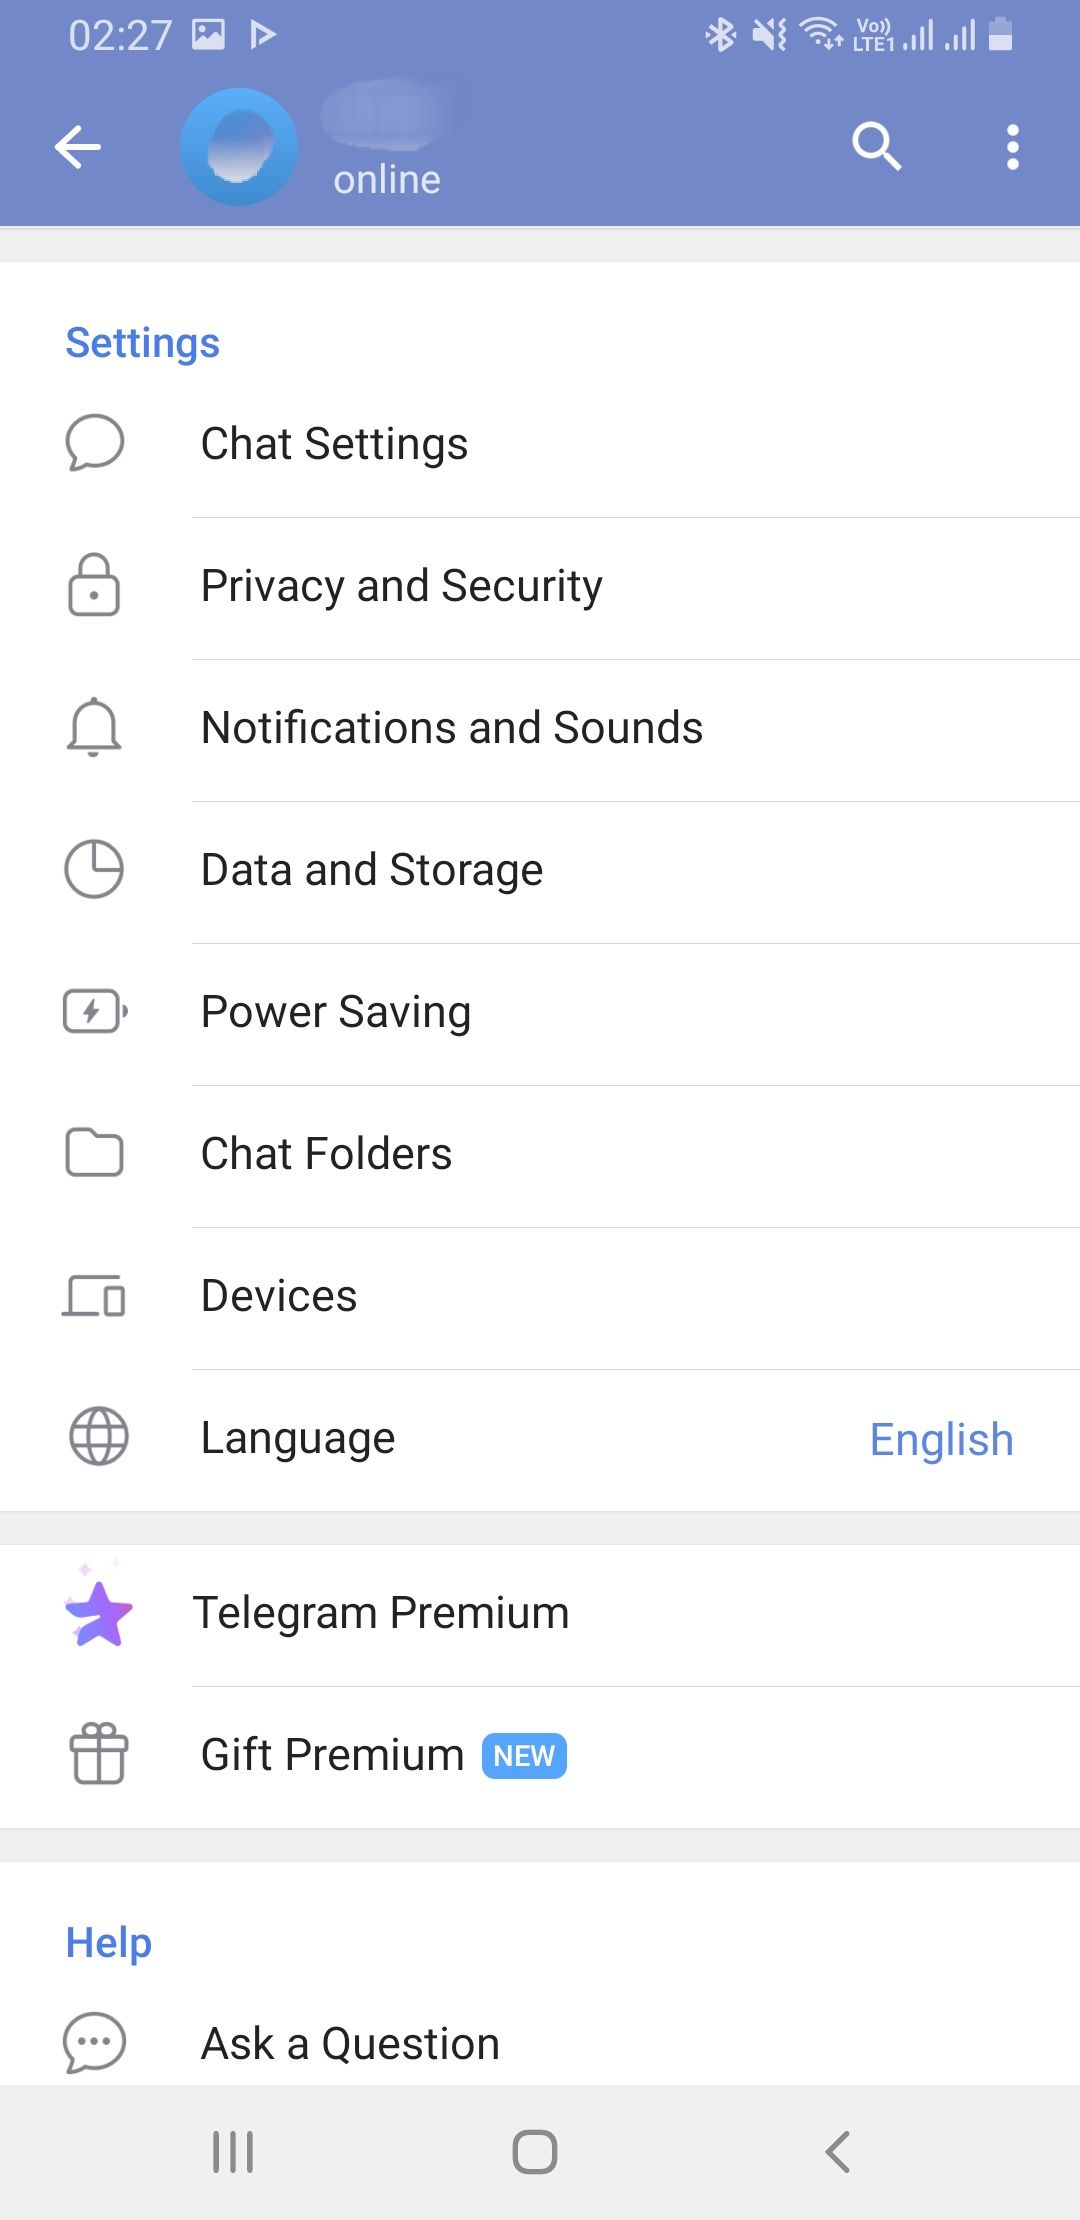 Telegram settings menu